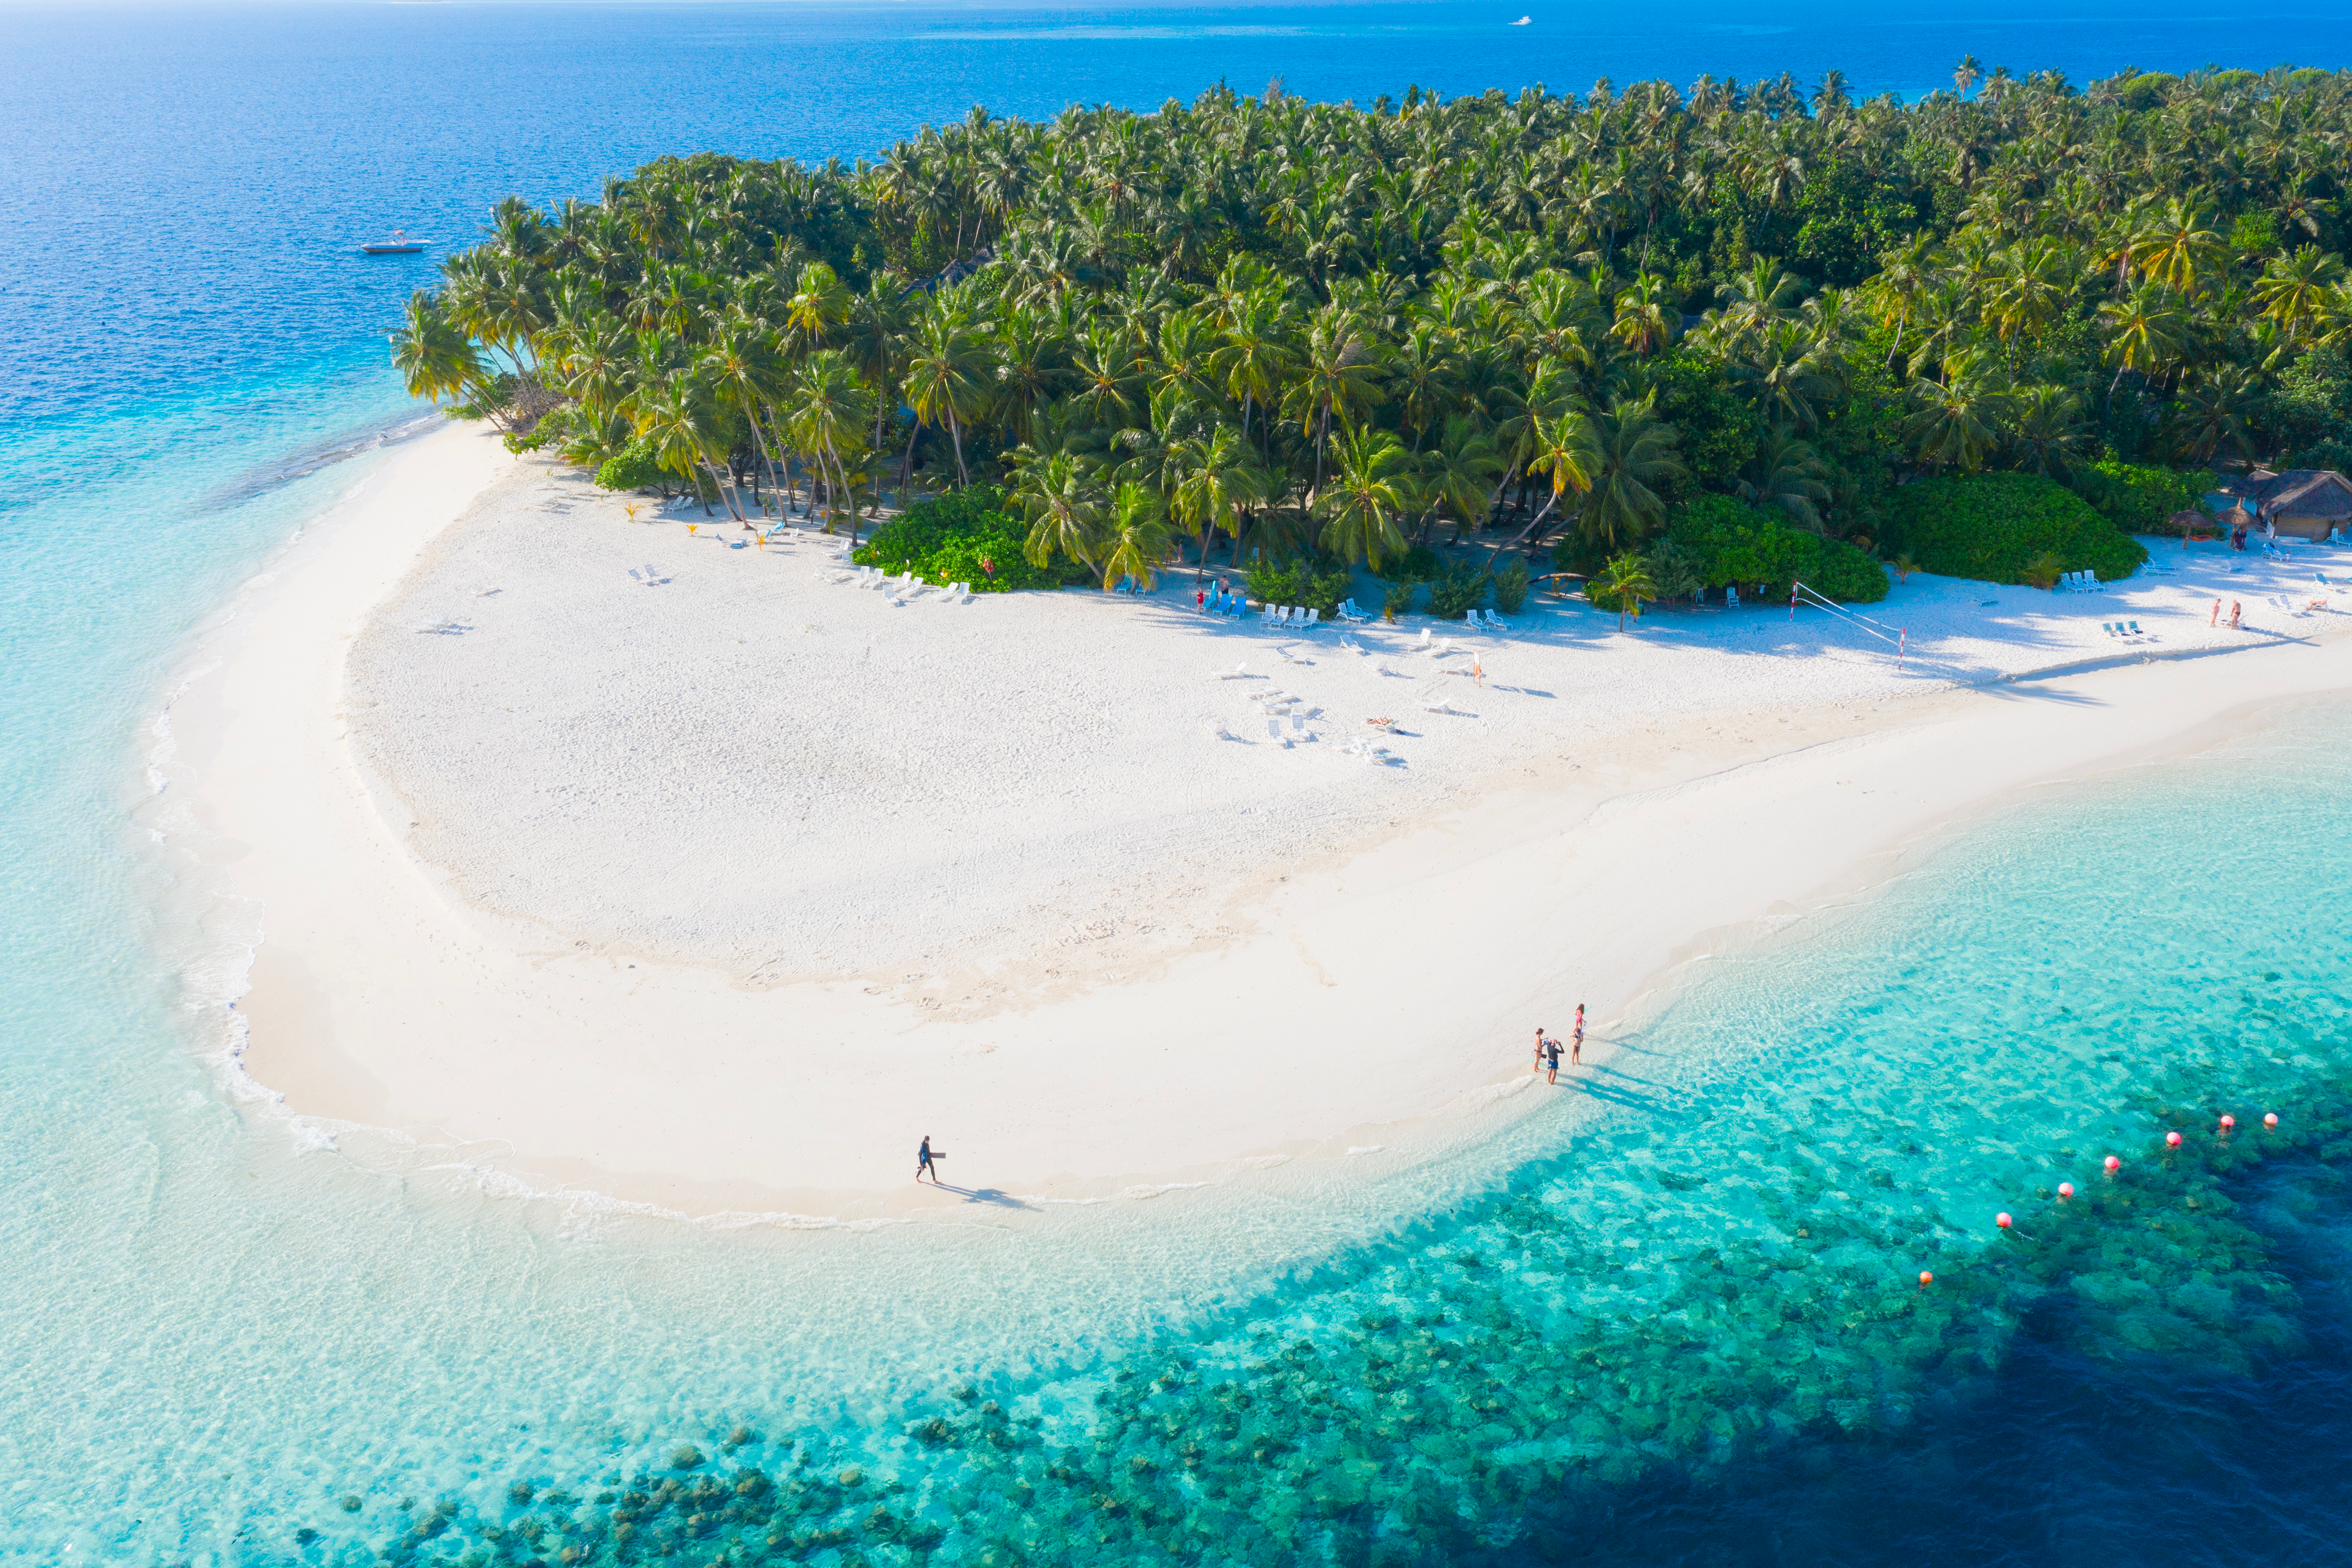 voyage maldives fairmoove tourisme responsable